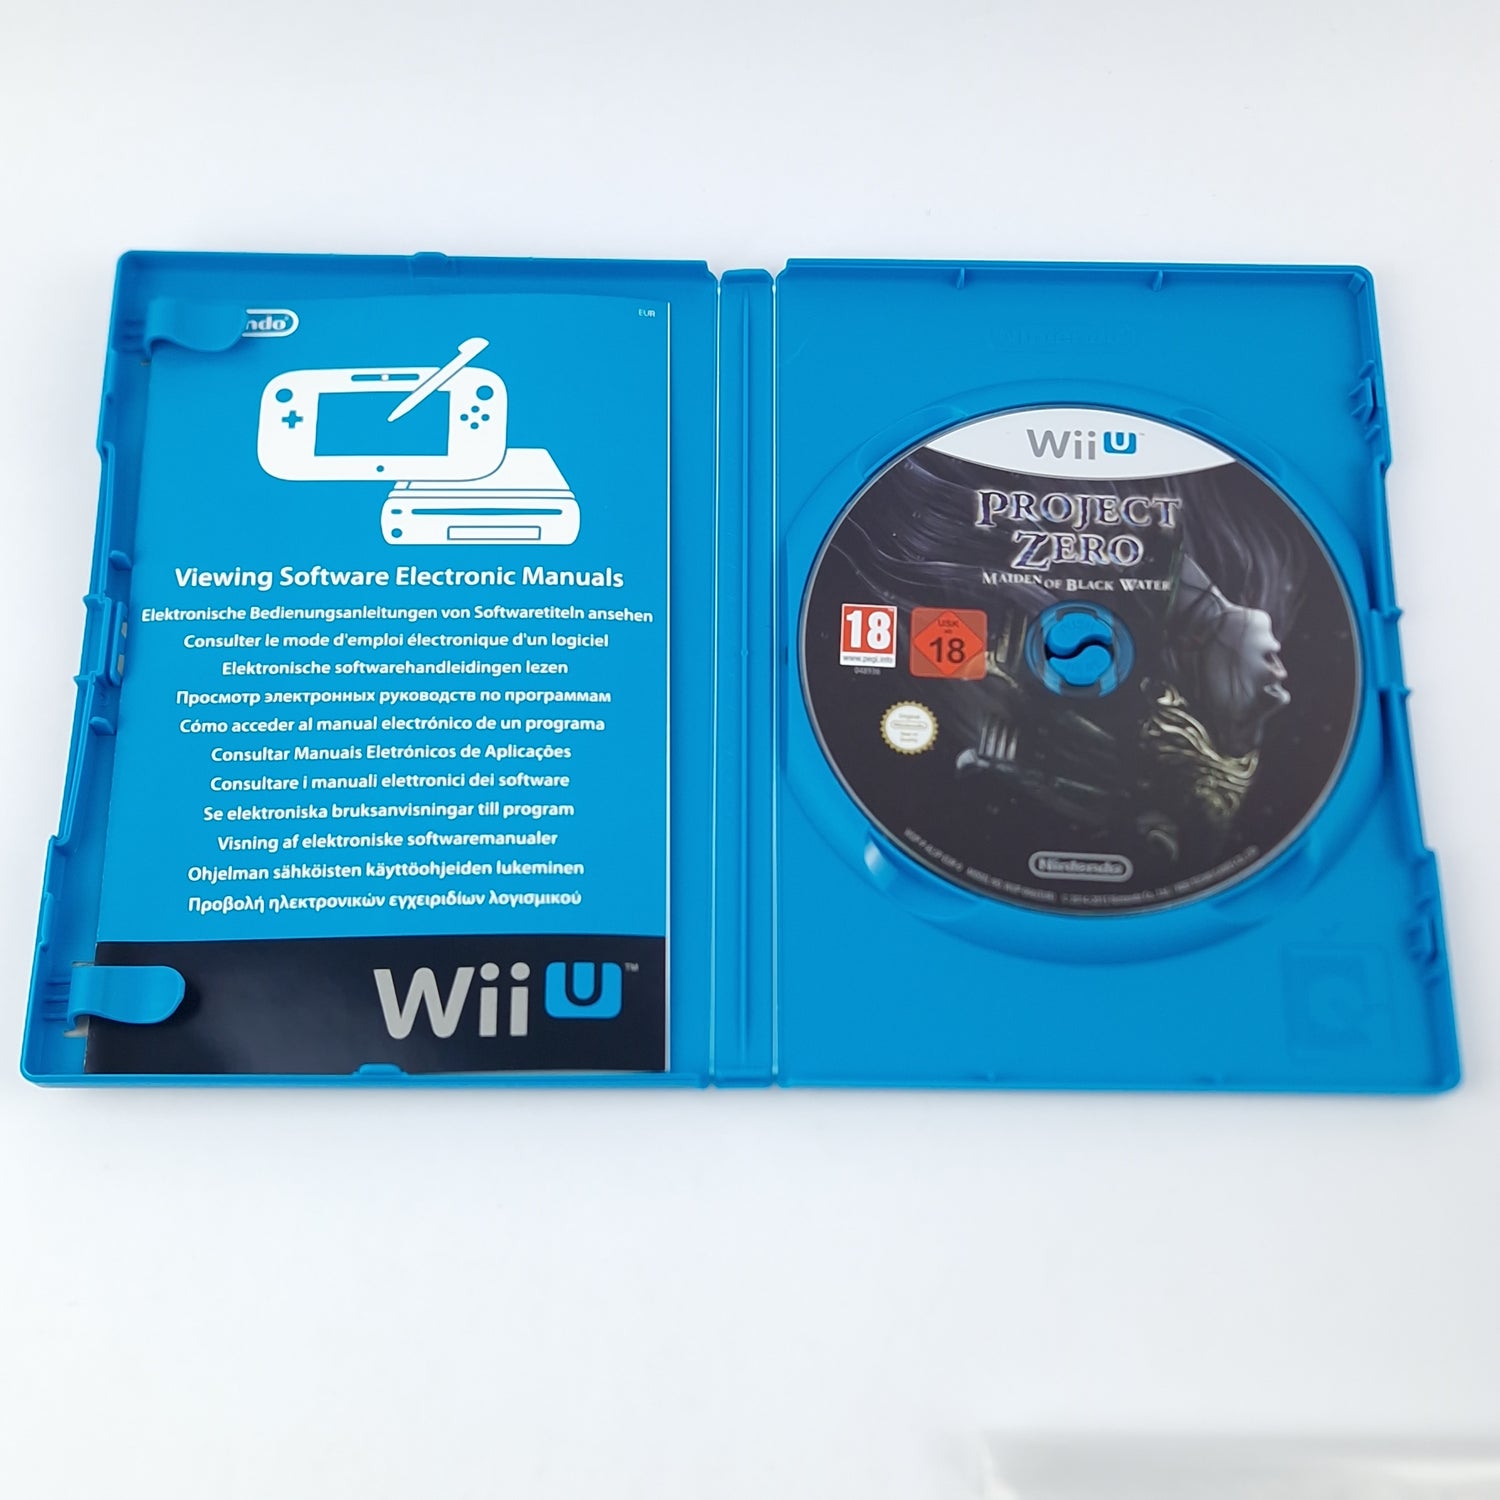 Nintendo Wii U Spiel : Project Zero Maiden of Black Water Limited Edition - OVP